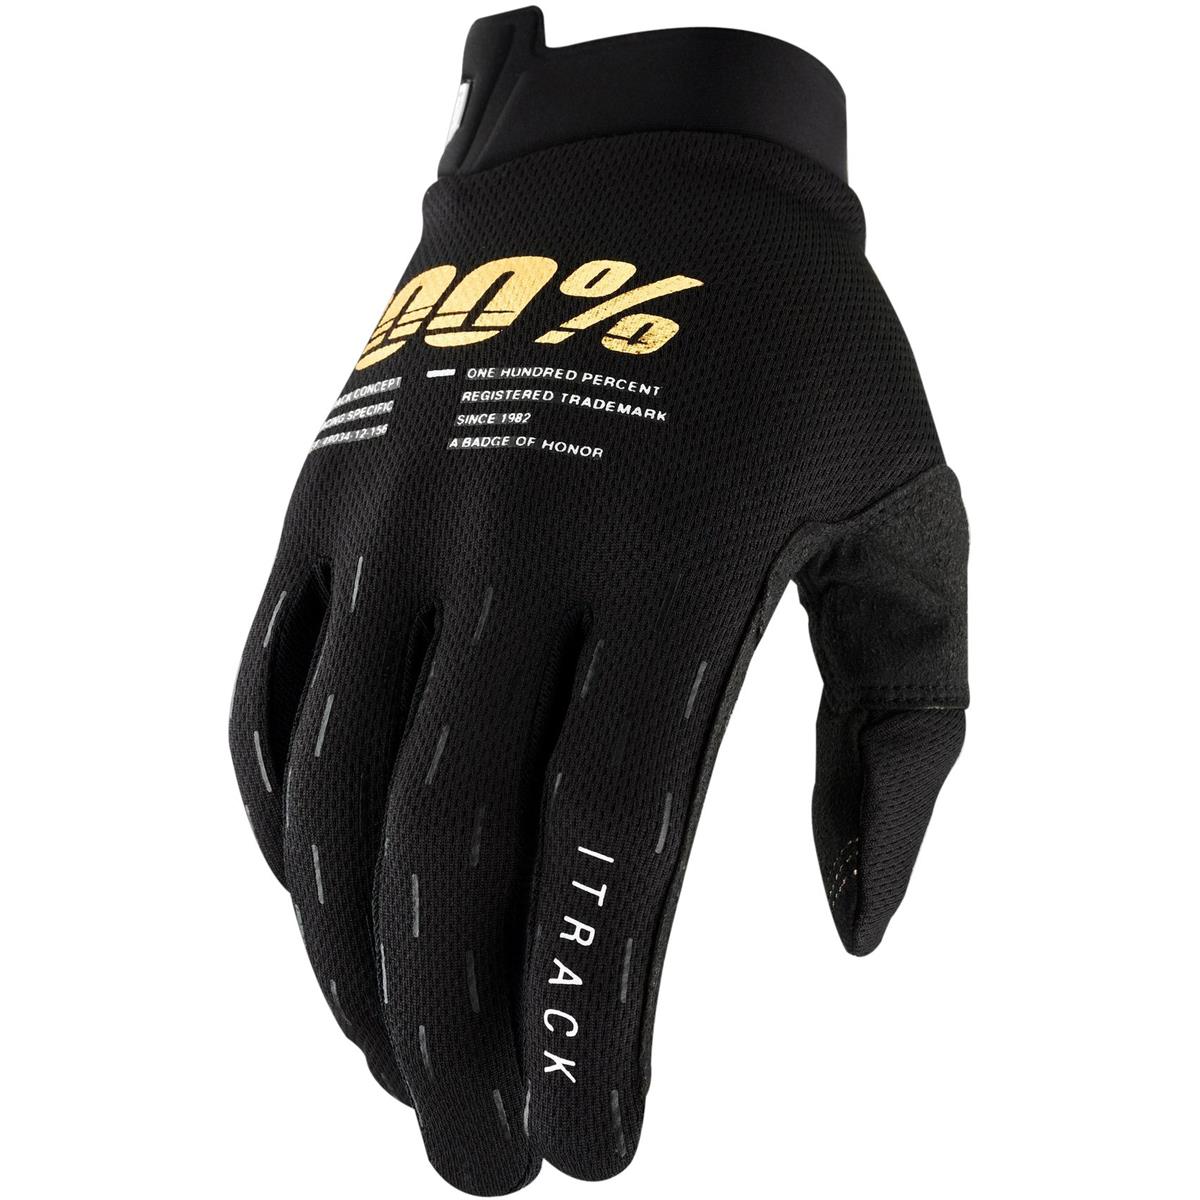 2020 100% Prozent itrack Handschuhe schwarz fluo MTB DH MX BMX Motocross Enduro 